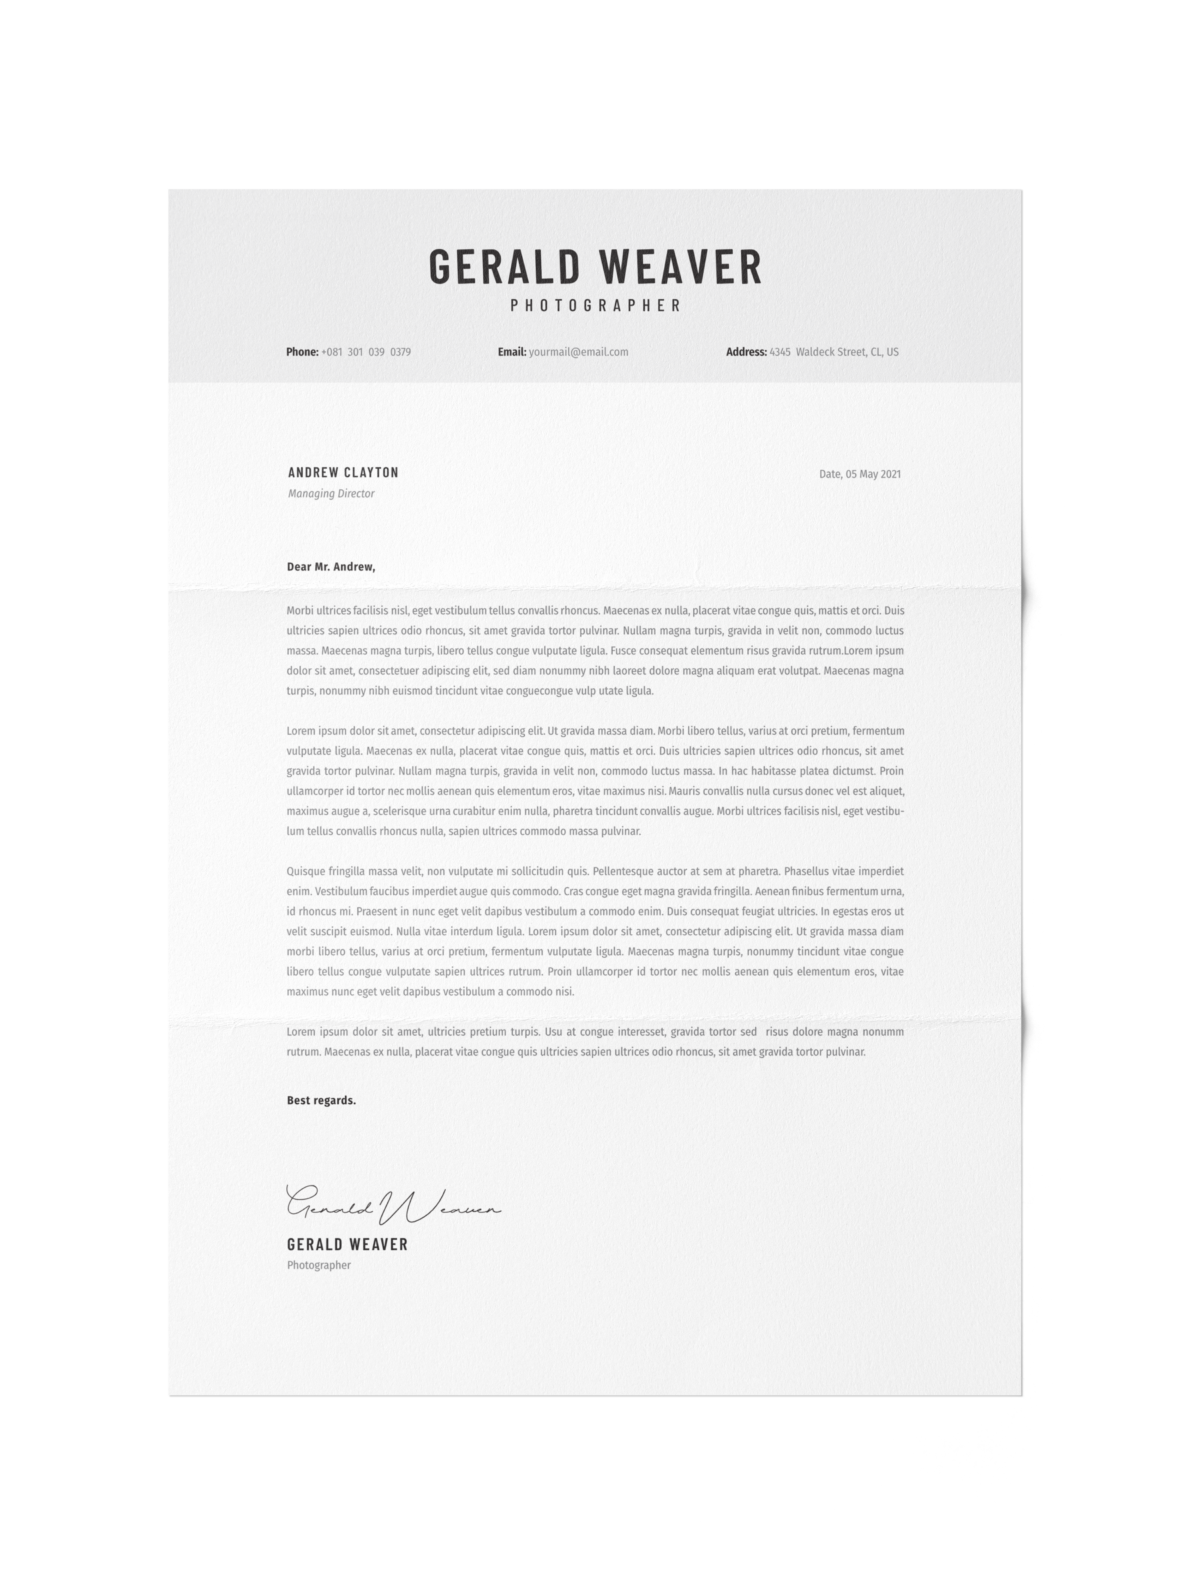 CV #58 Gerald Weaver